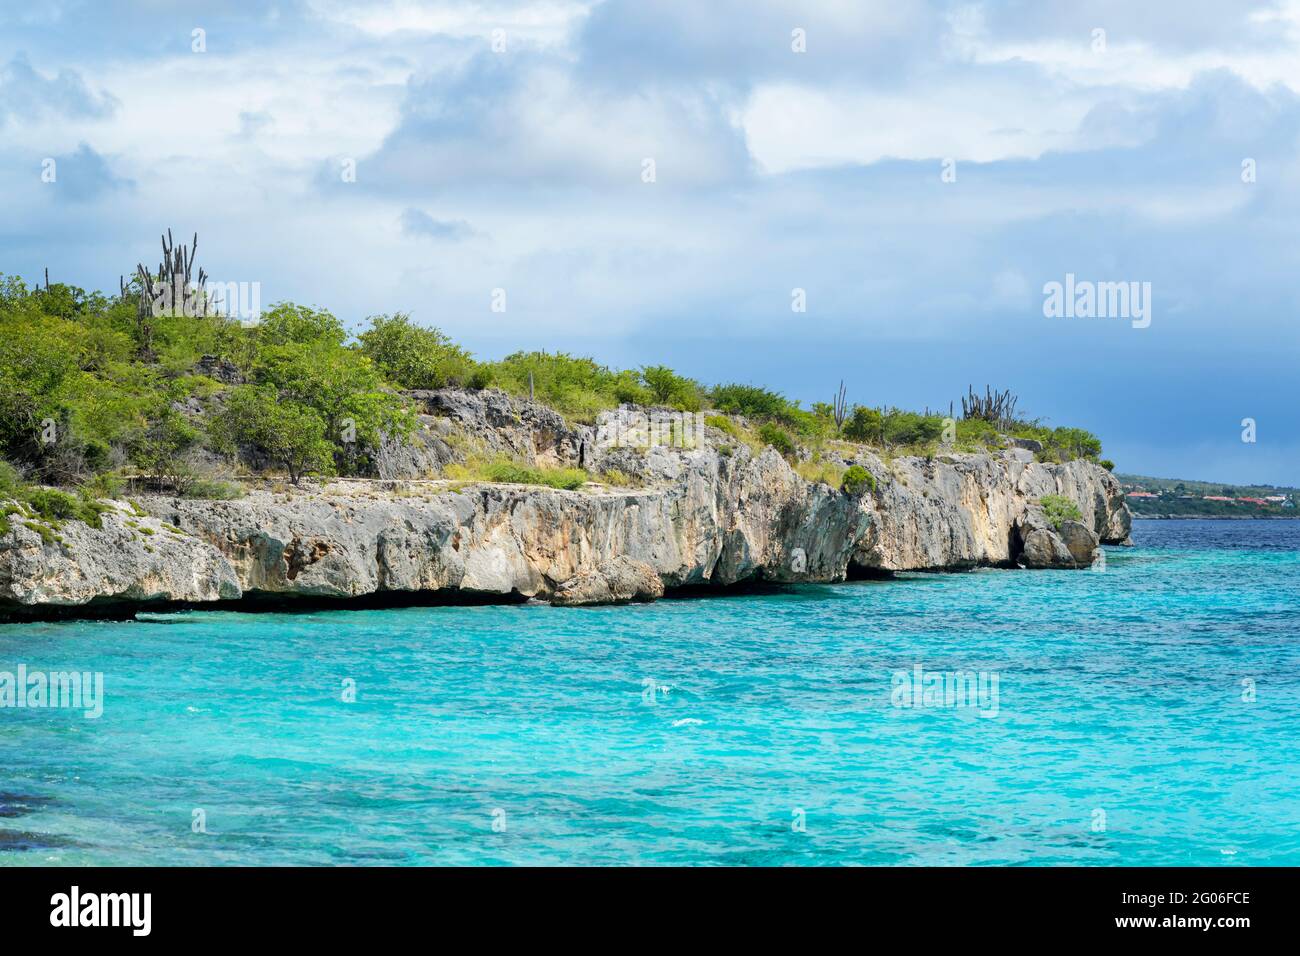 Typical coastline of Bonaire, Dutch Caribbean. Stock Photo